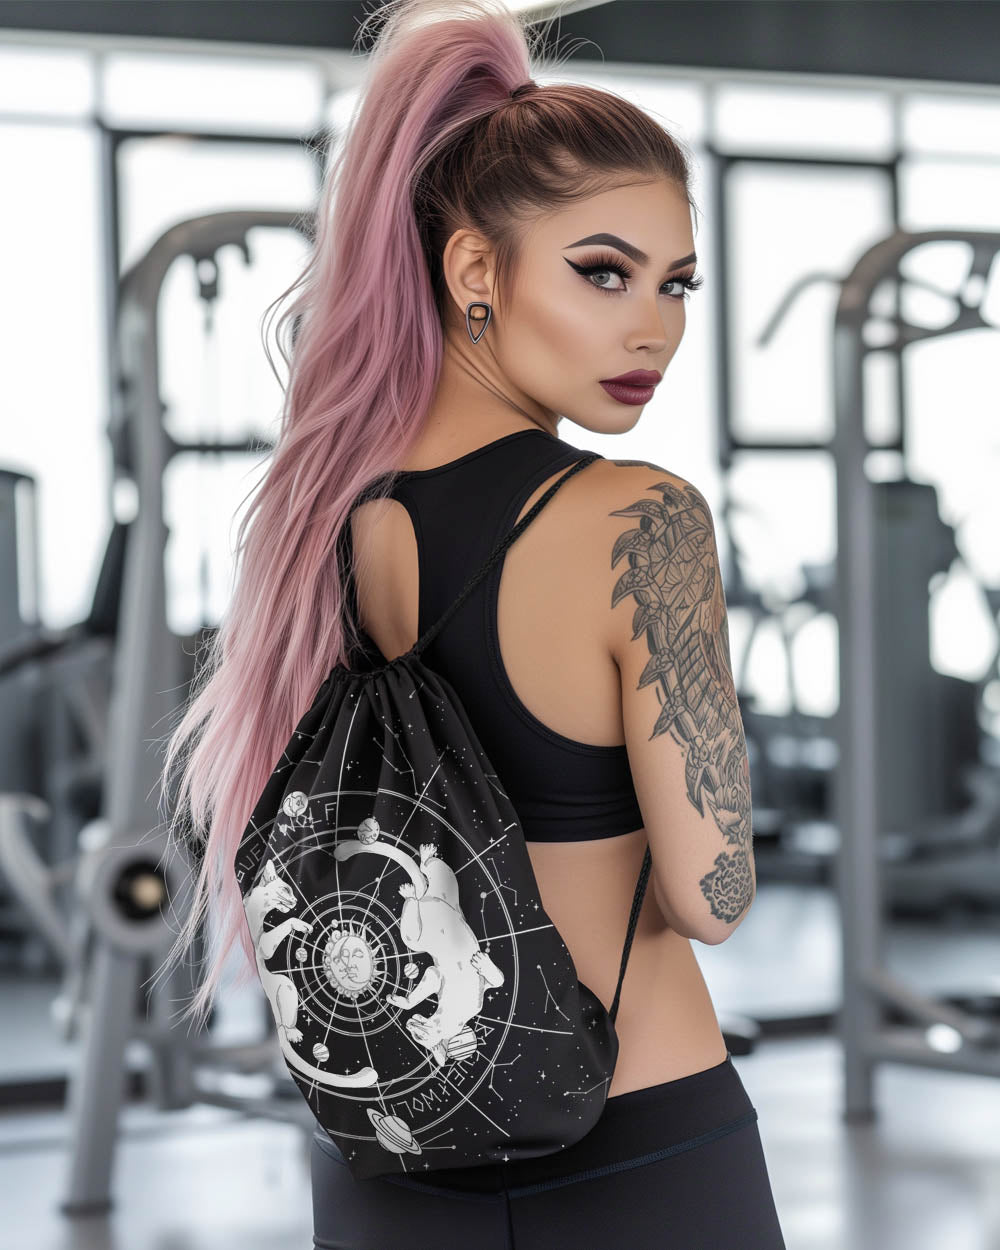 Y.U.M.C. Travel Yoga Gym Bag for Women, Carrying Workout Gear